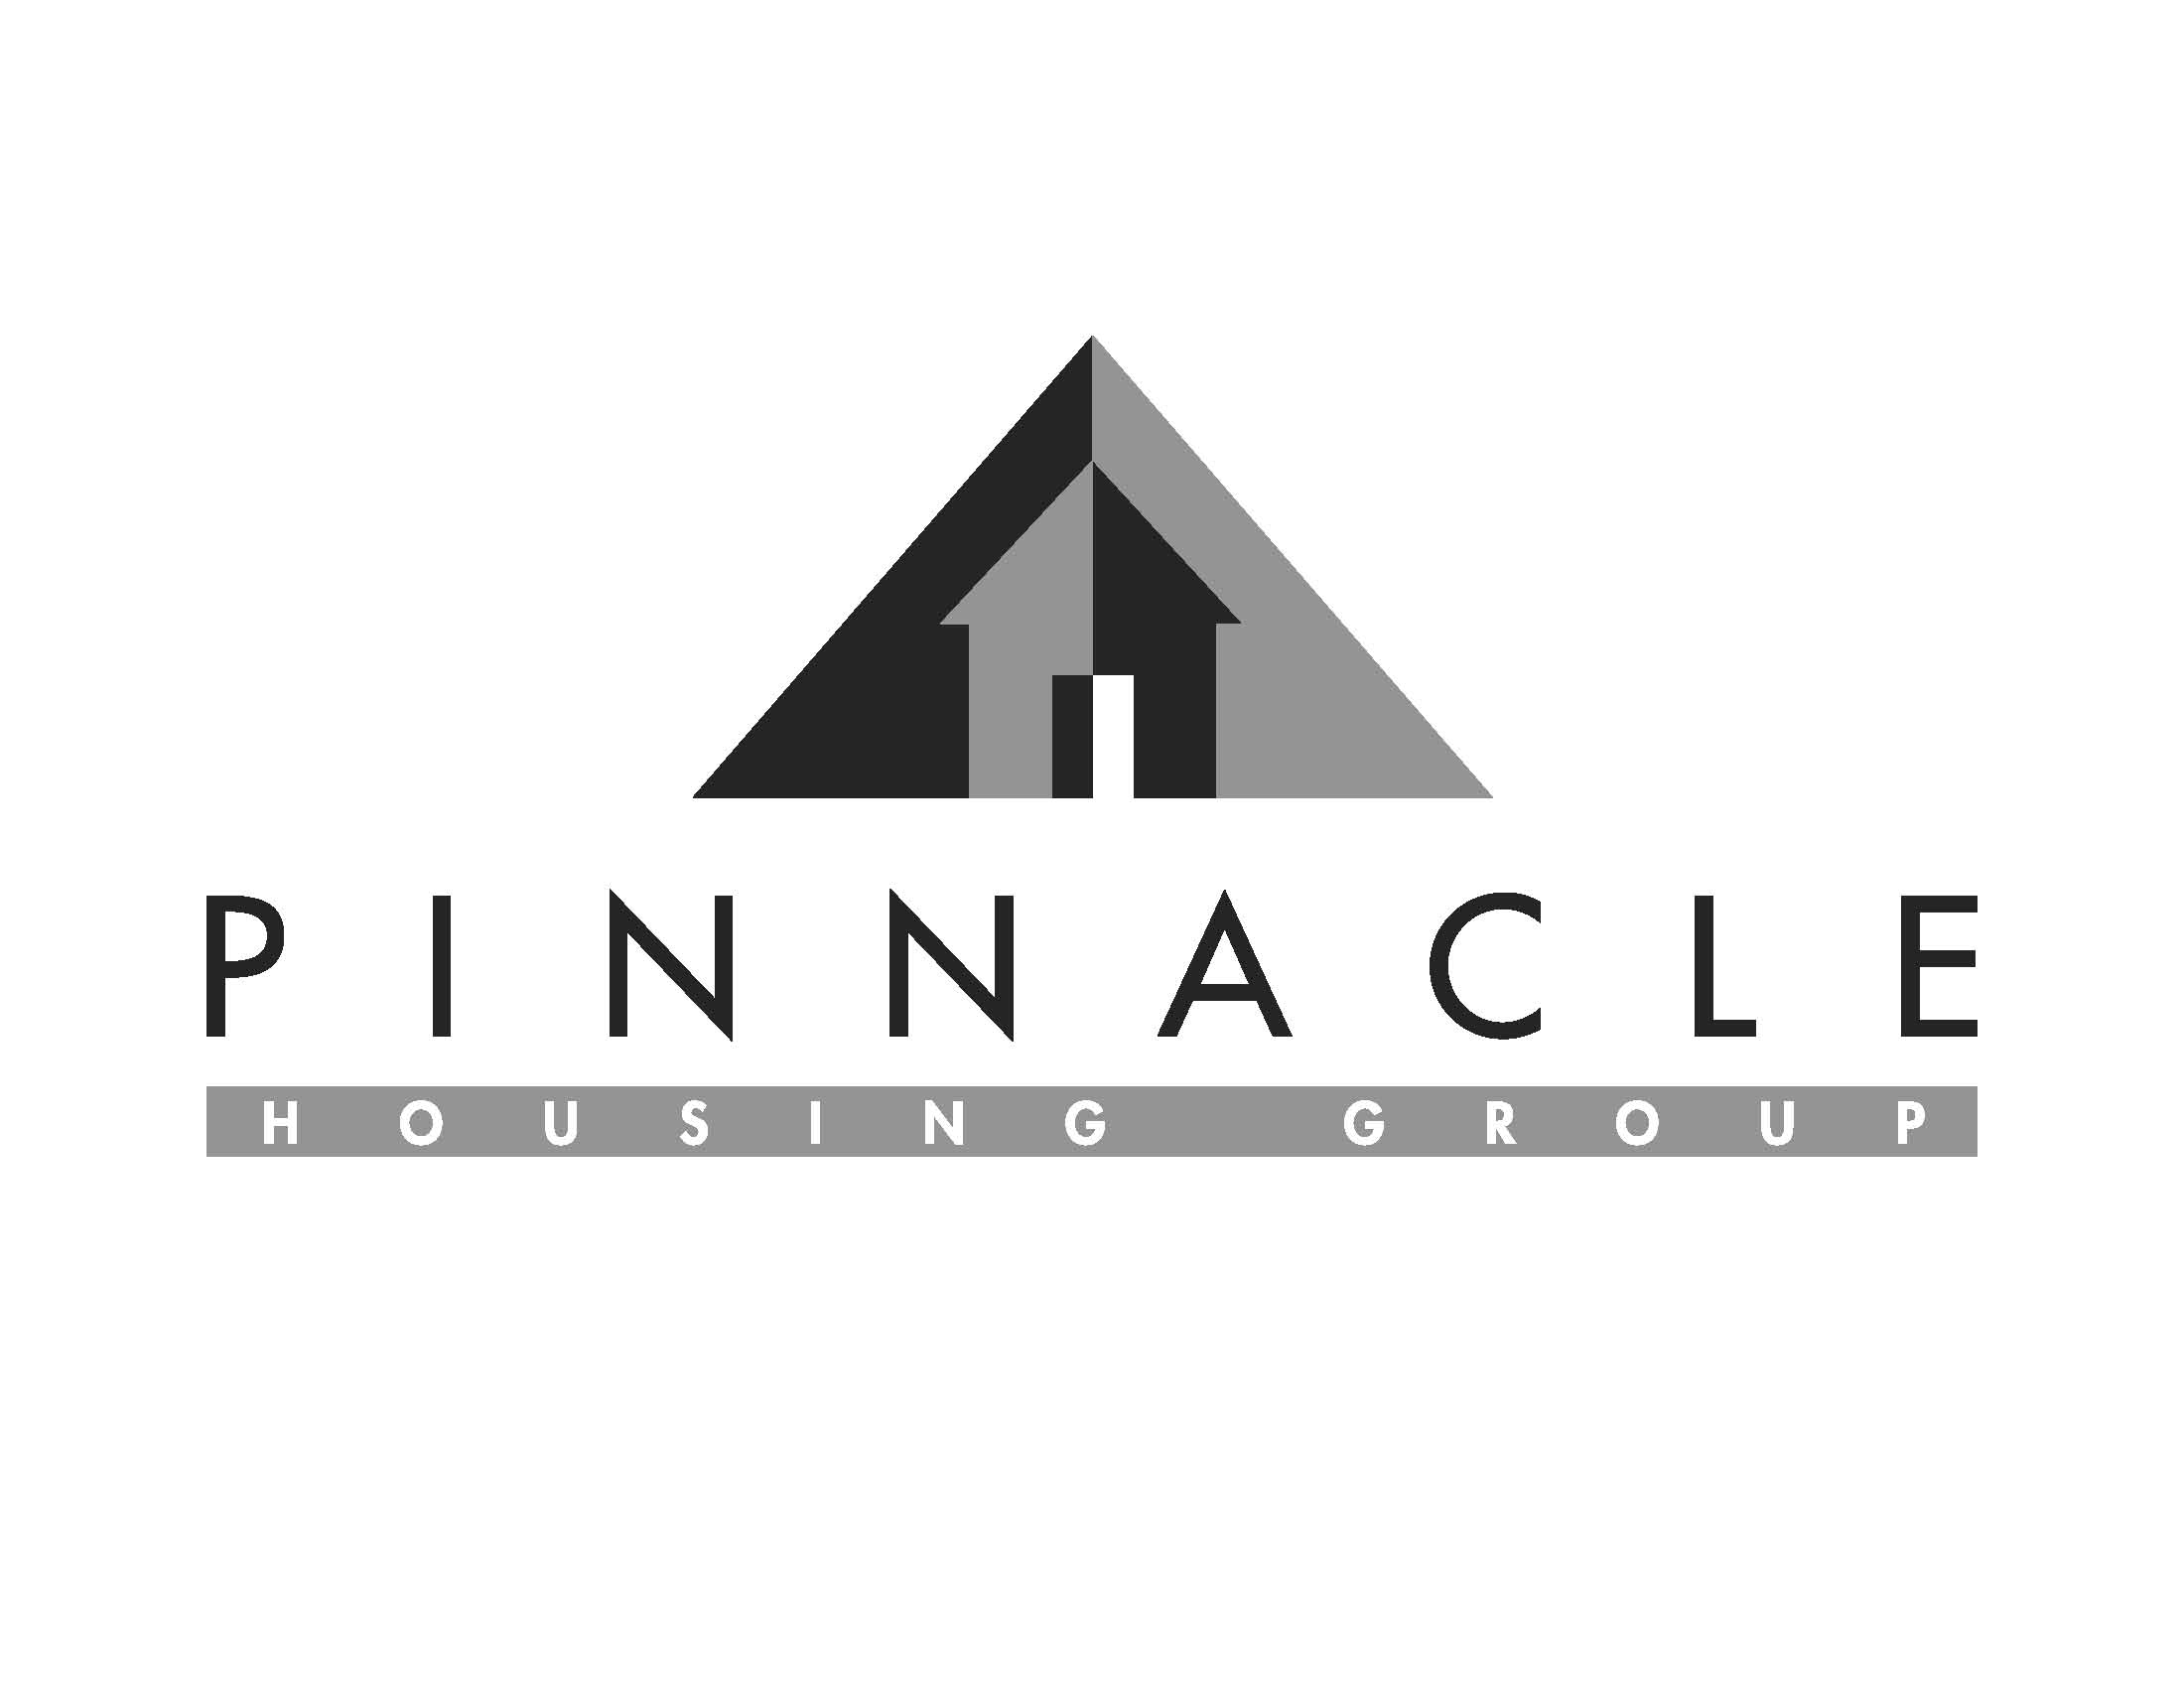 Pinnacle Housing Group